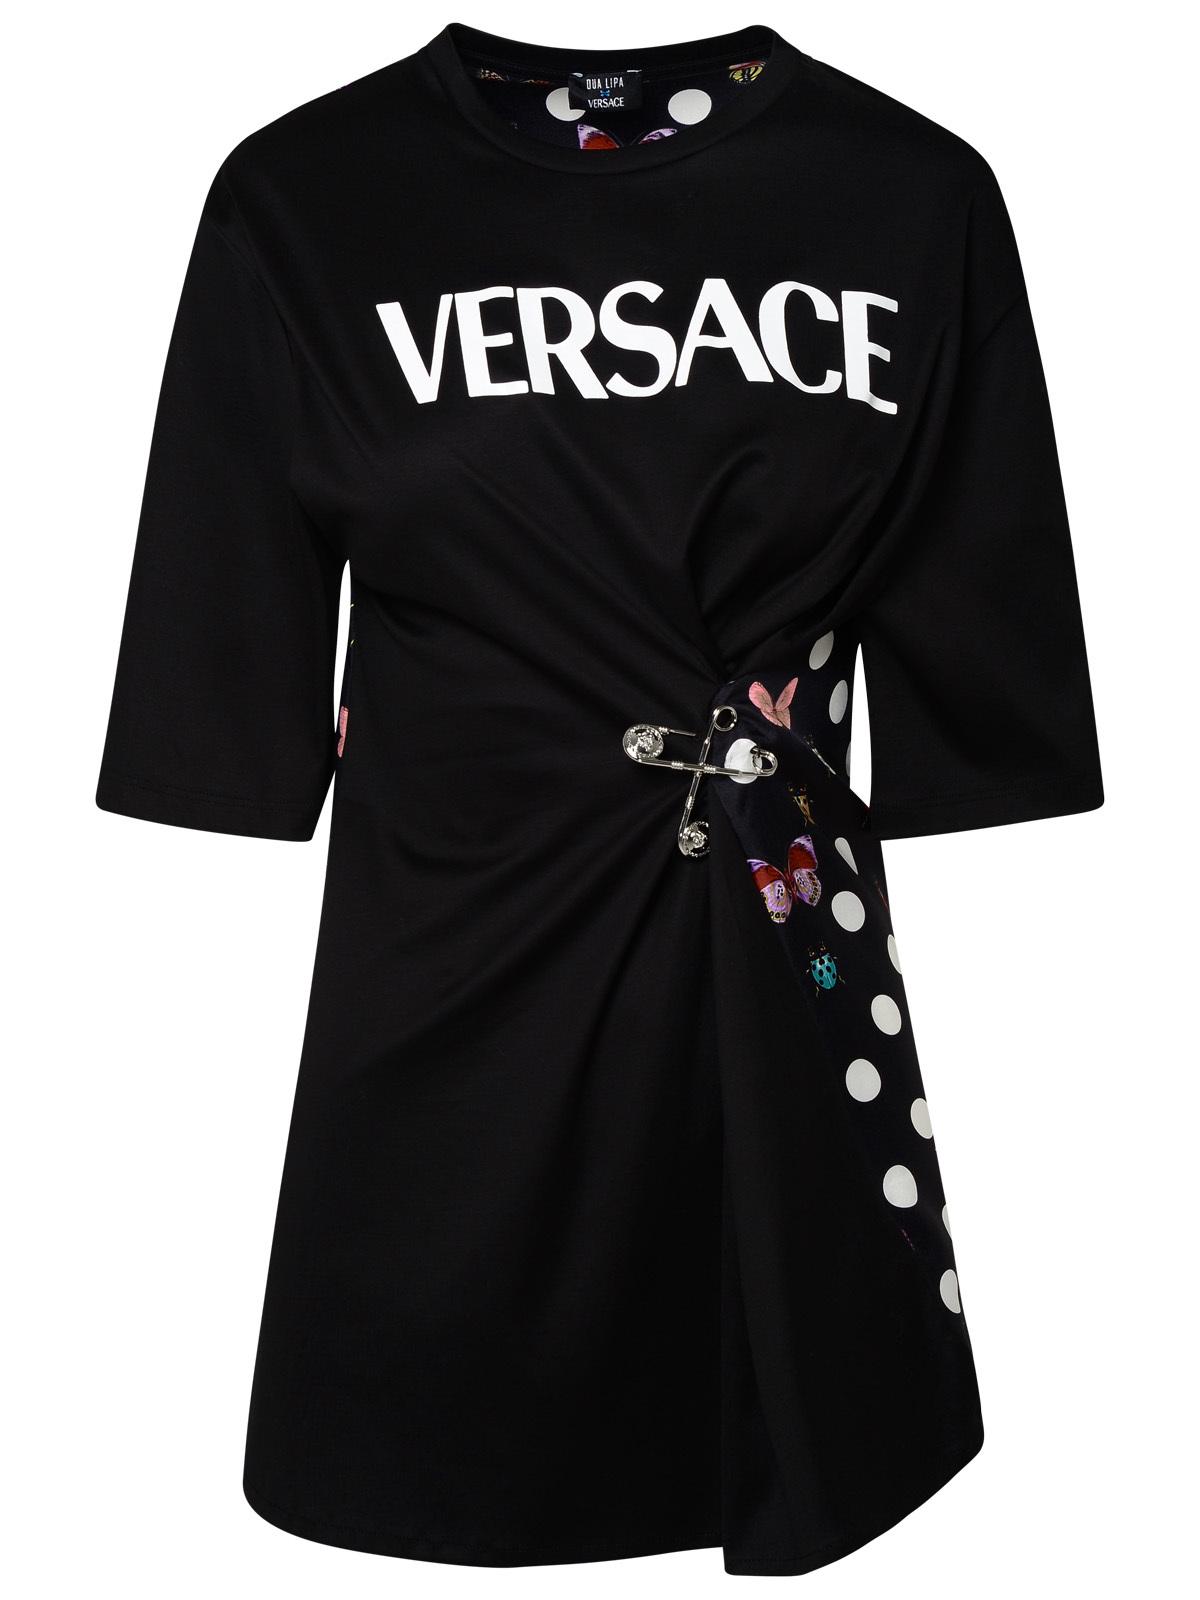 Versace Black Cotton Blend T-Shirt Woman